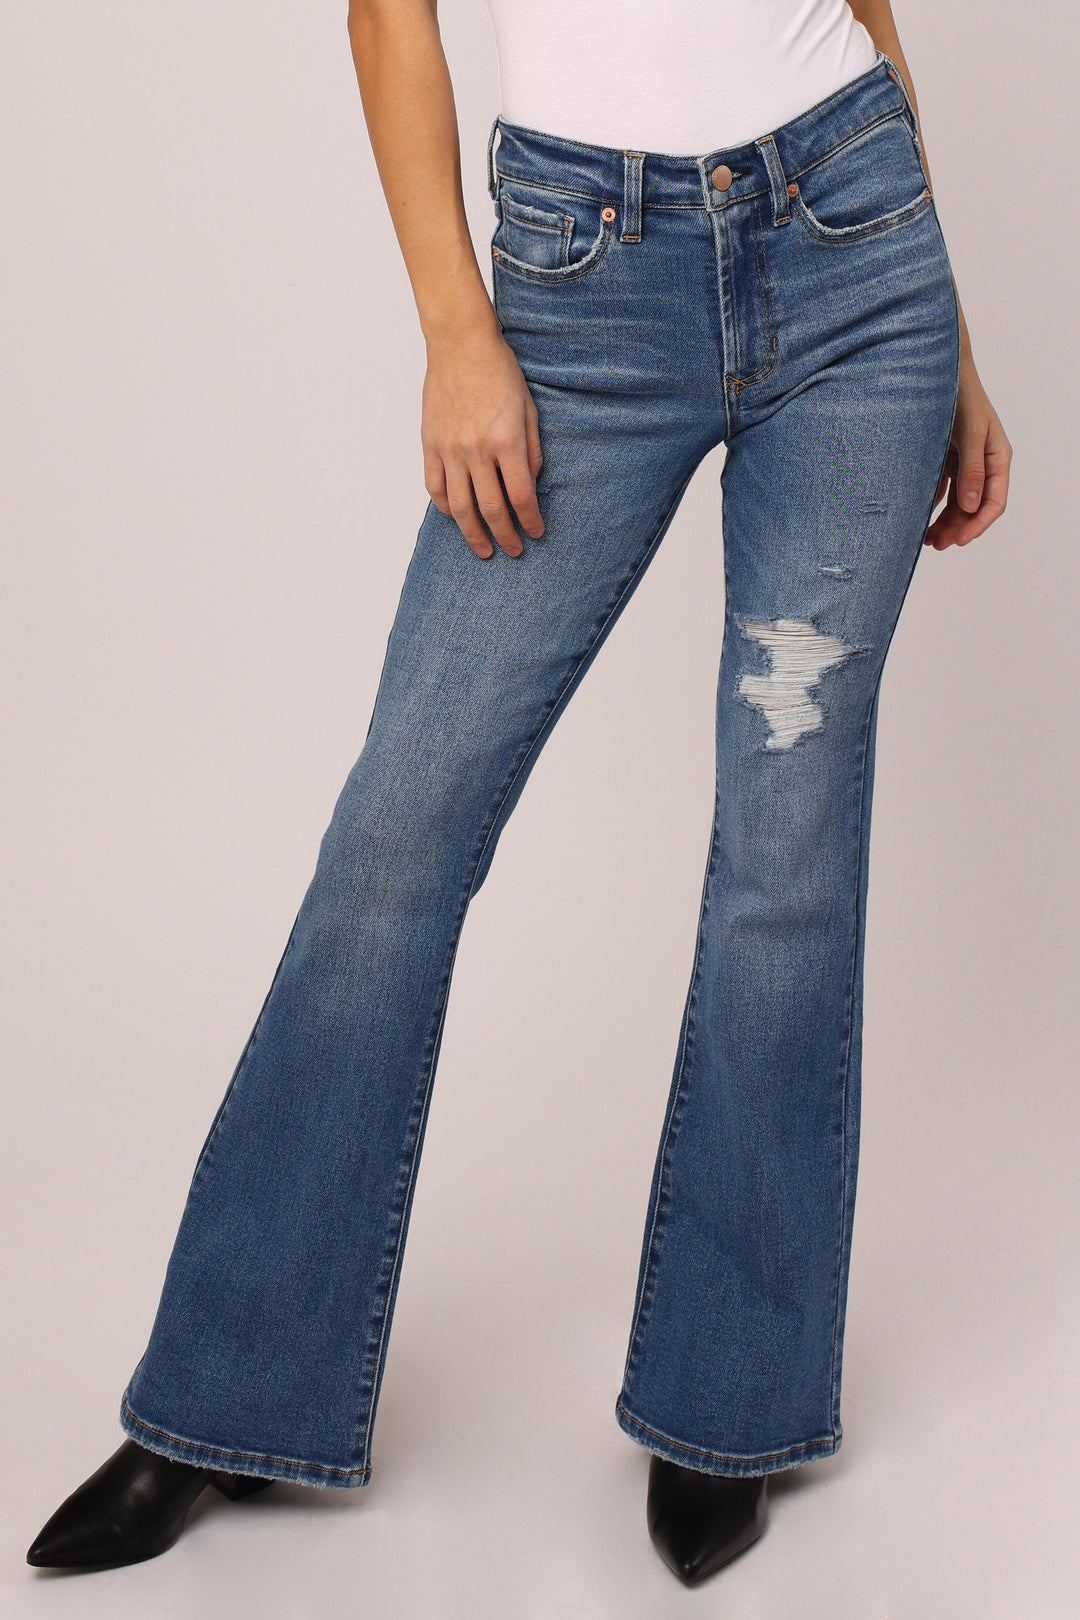 Women's Essential Super Flare Jeans - Long Inseam  Super flare jeans,  Flare jeans, Women essentials